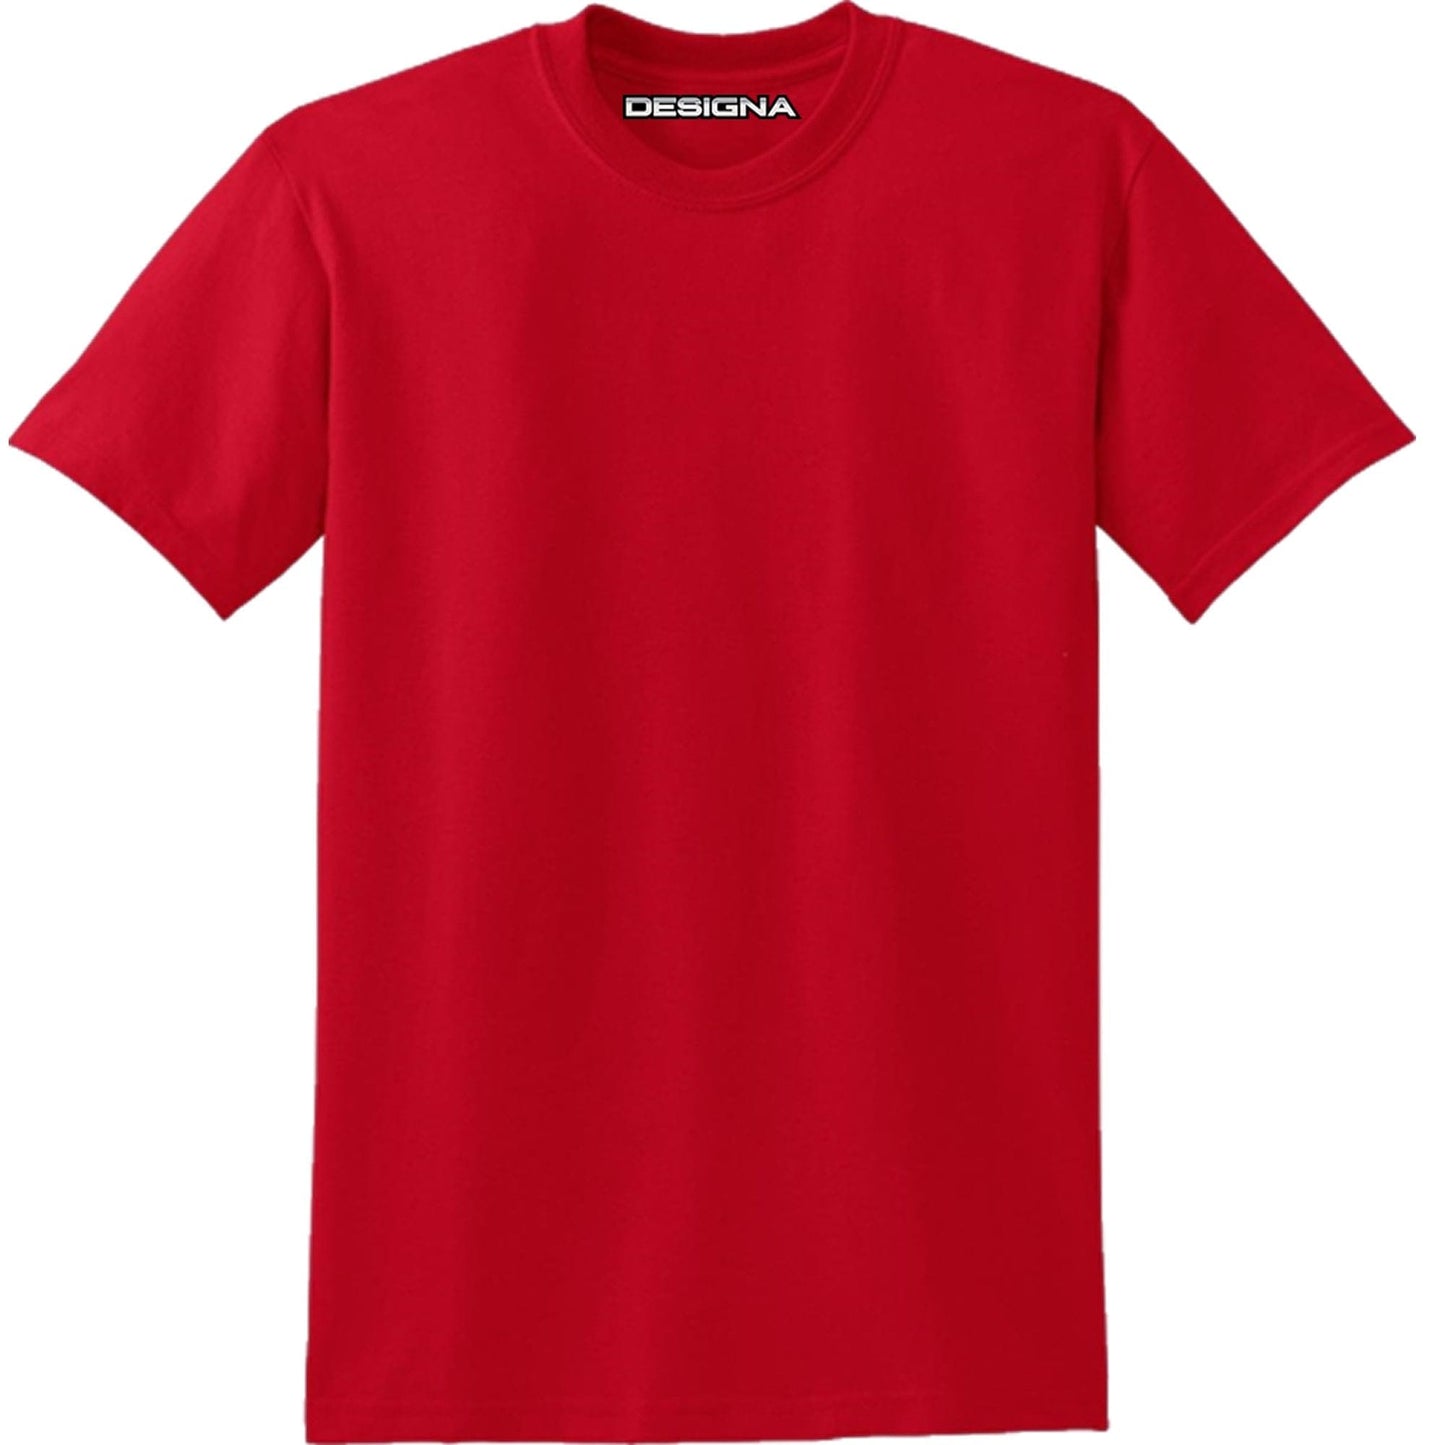 Designa - T Shirt - Heavyweight - Cotton - Plain Red 2XL